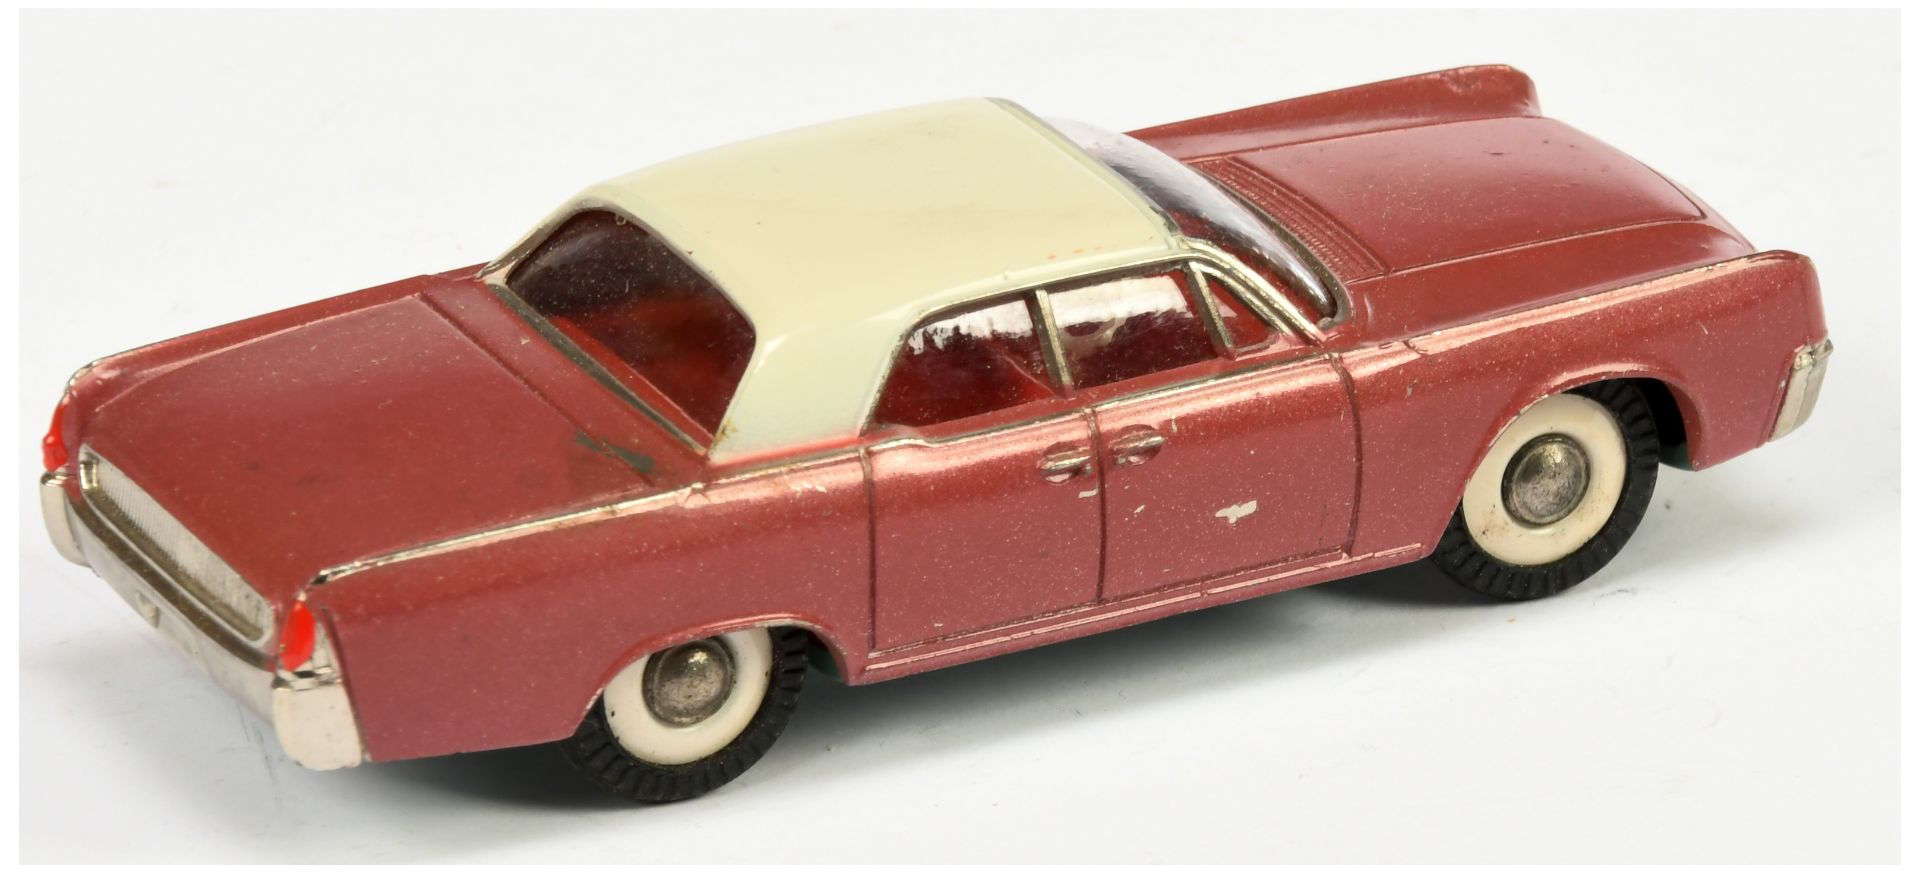 Cherryca Phenix  17 Lincoln Continental - Metallic Cerise, off white hood, red interior, chrome t... - Bild 2 aus 2